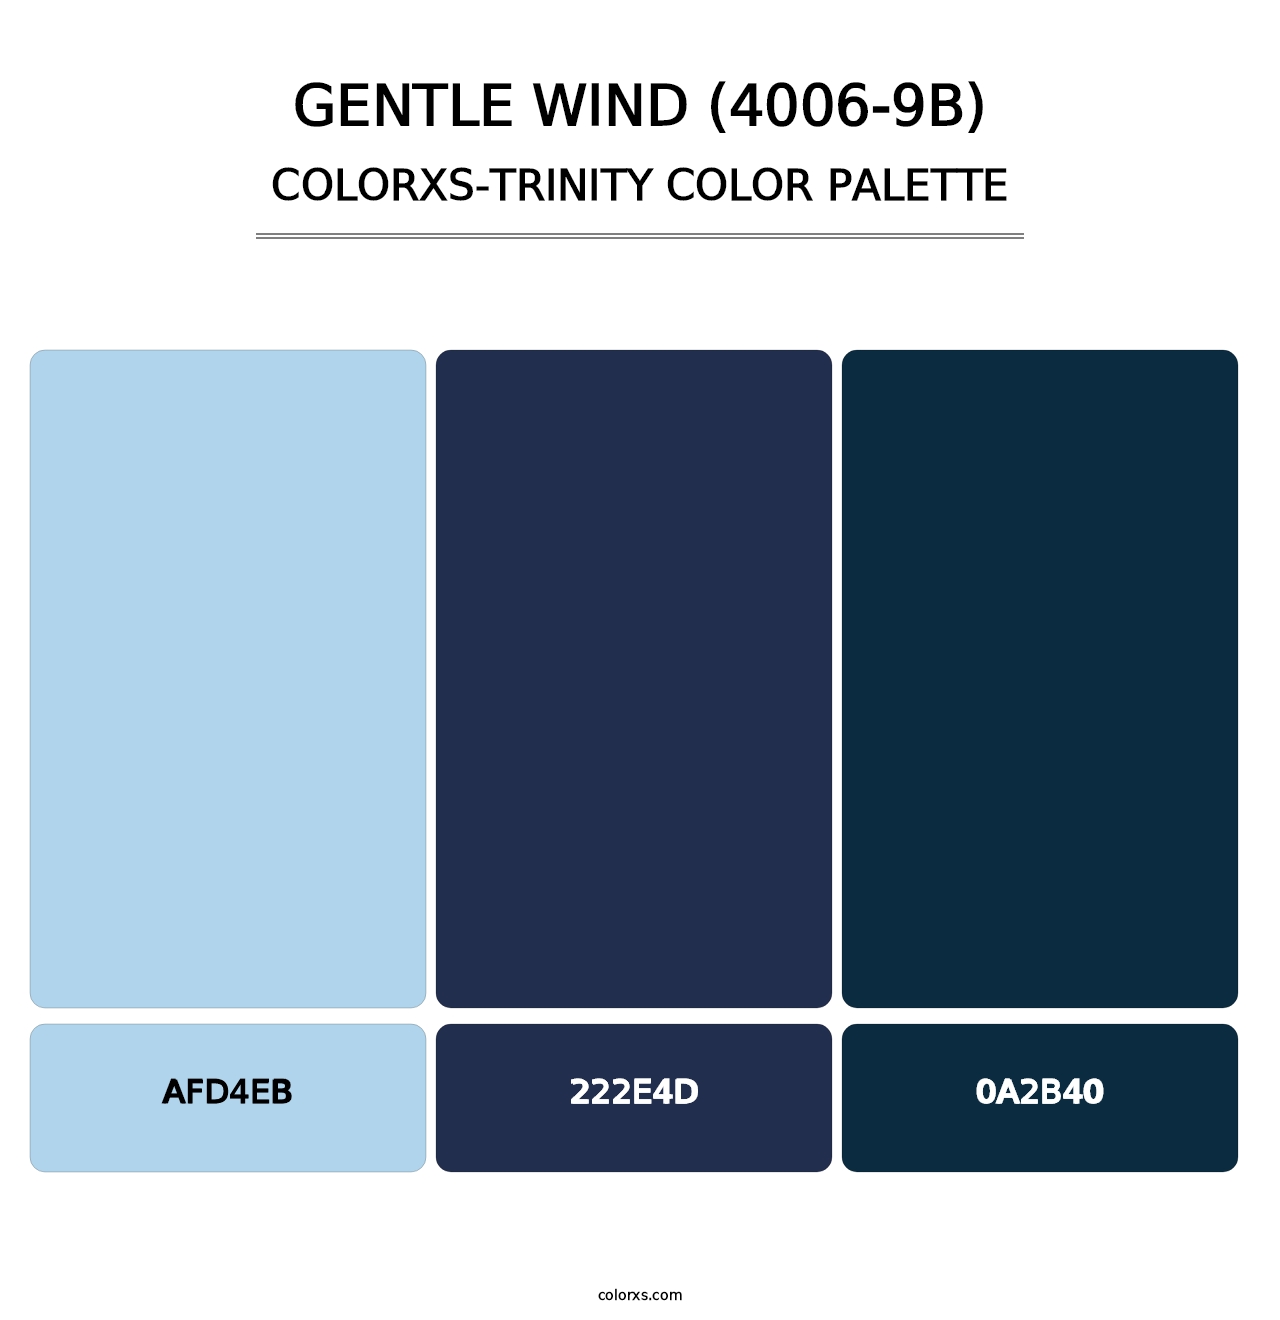 Gentle Wind (4006-9B) - Colorxs Trinity Palette